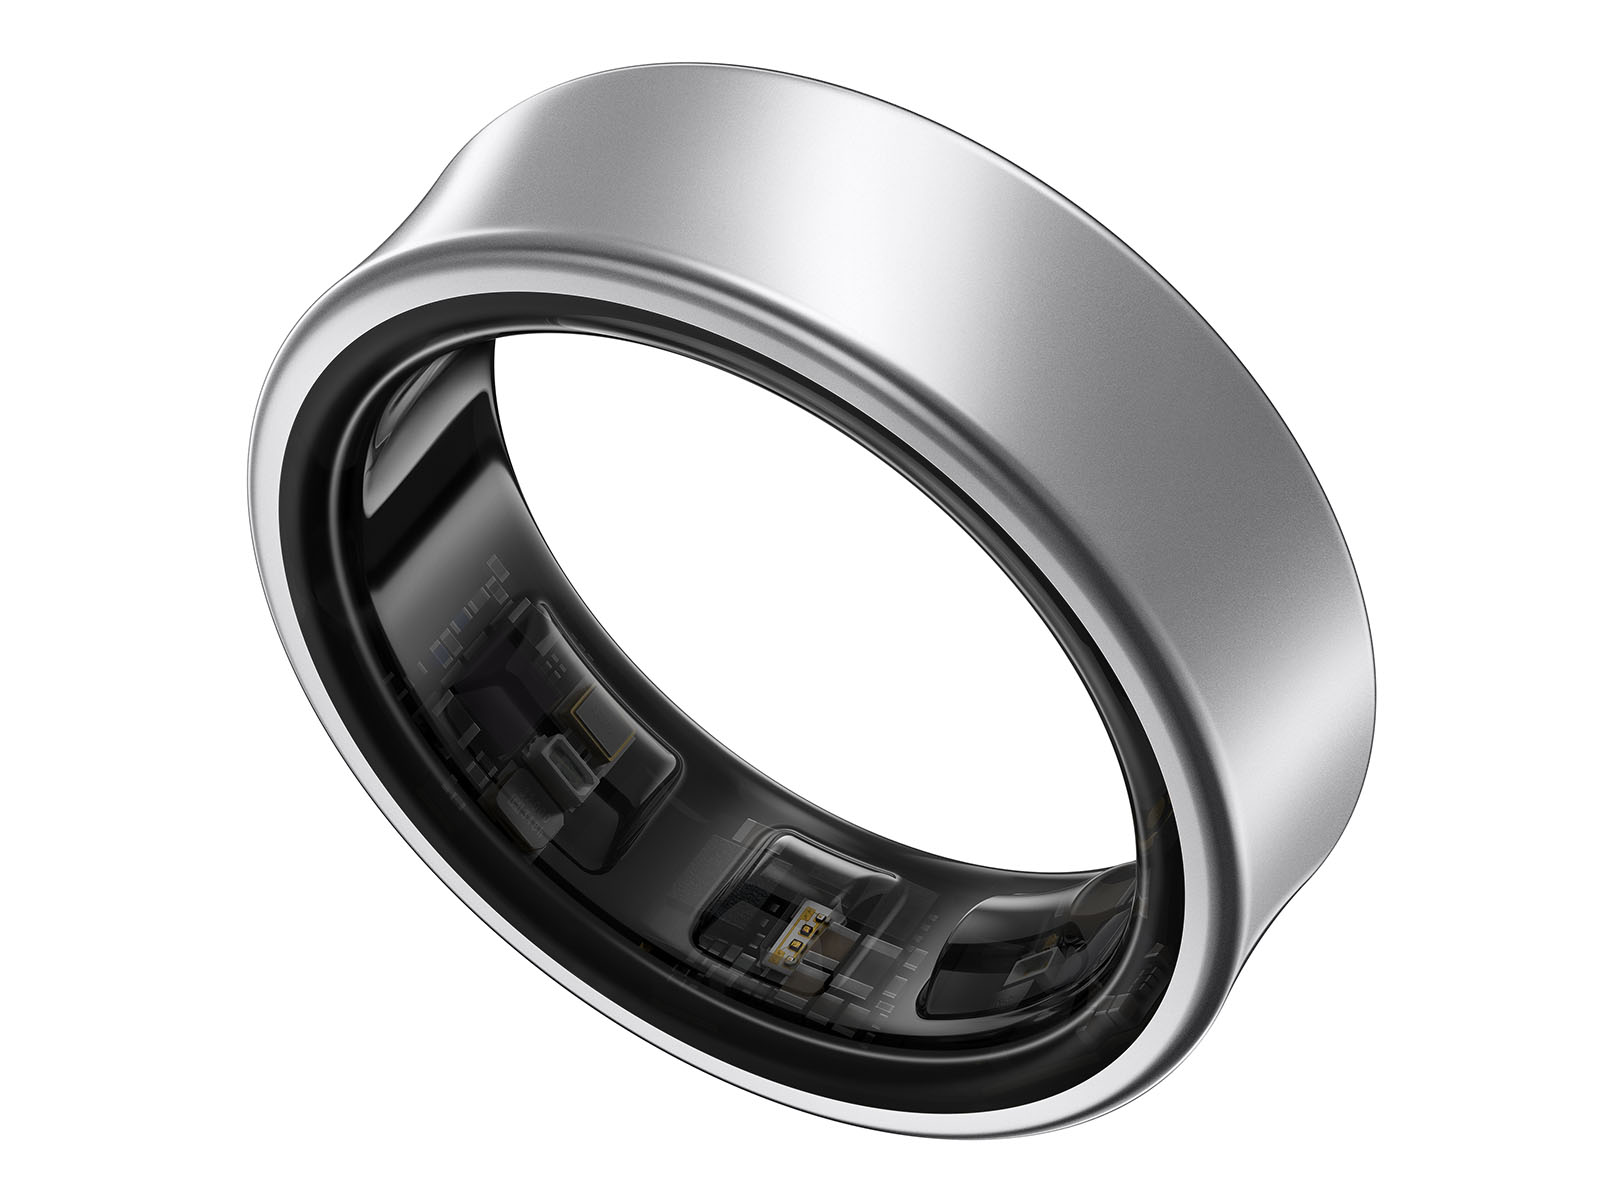 Thumbnail image of Galaxy Ring, Size 6, Titanium Silver